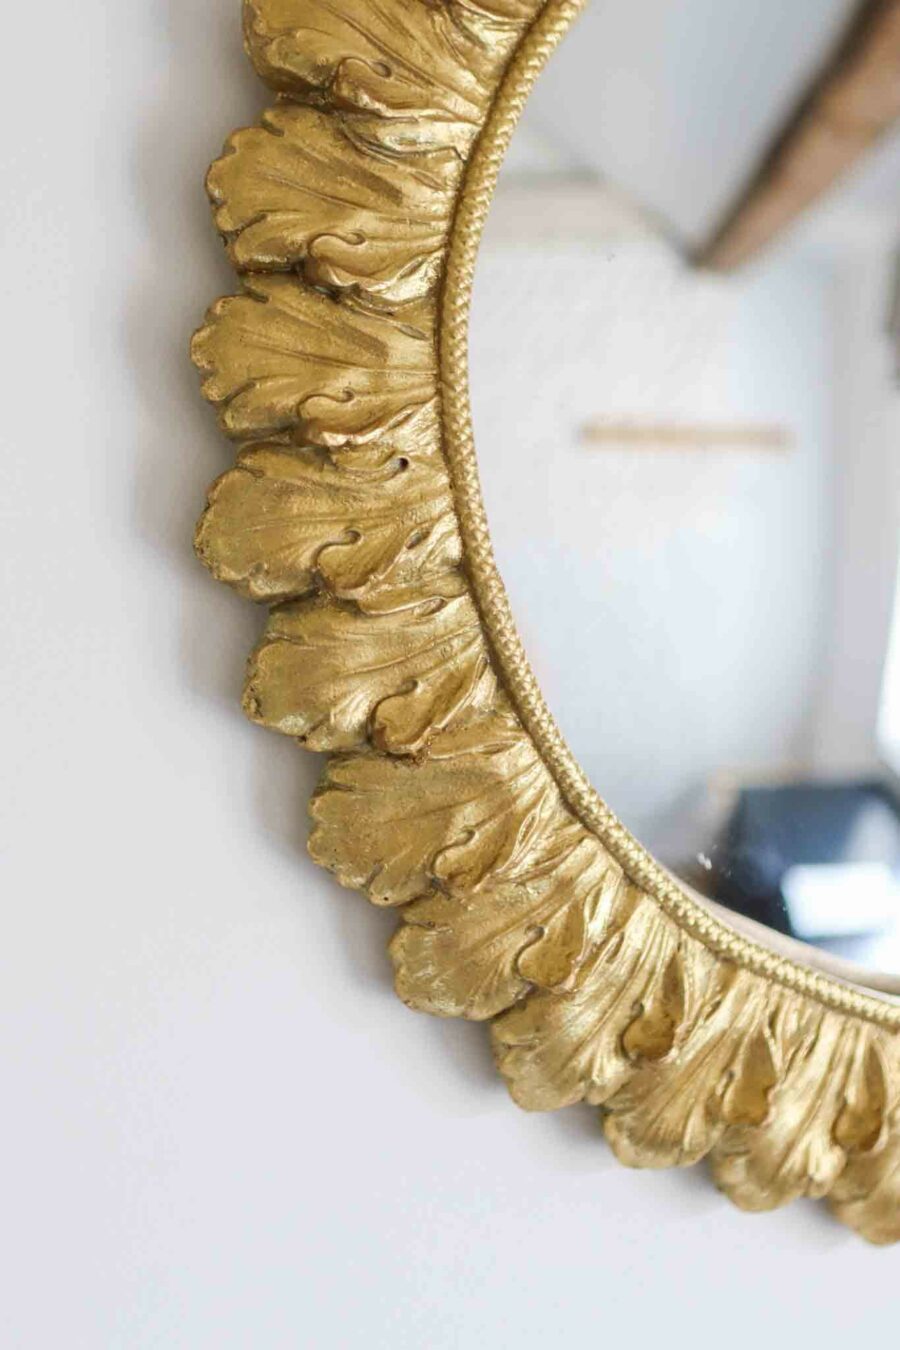 gold floral convex decorative mirror